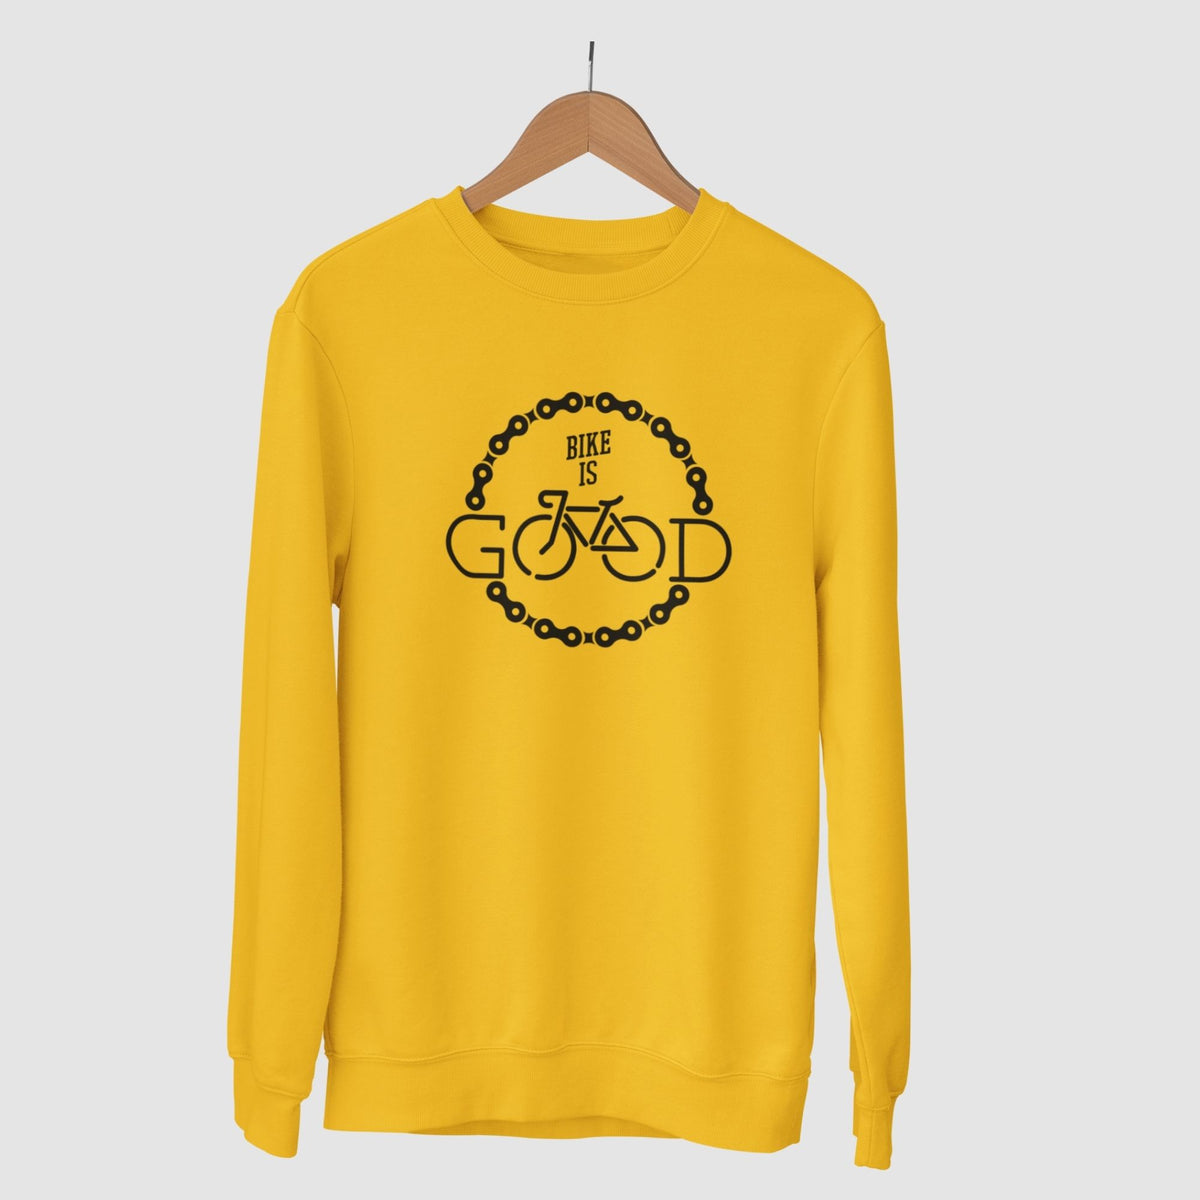 bike-is-good-cotton-printed-unisex-golden-yellow-sweatshirt-gogirgit-com